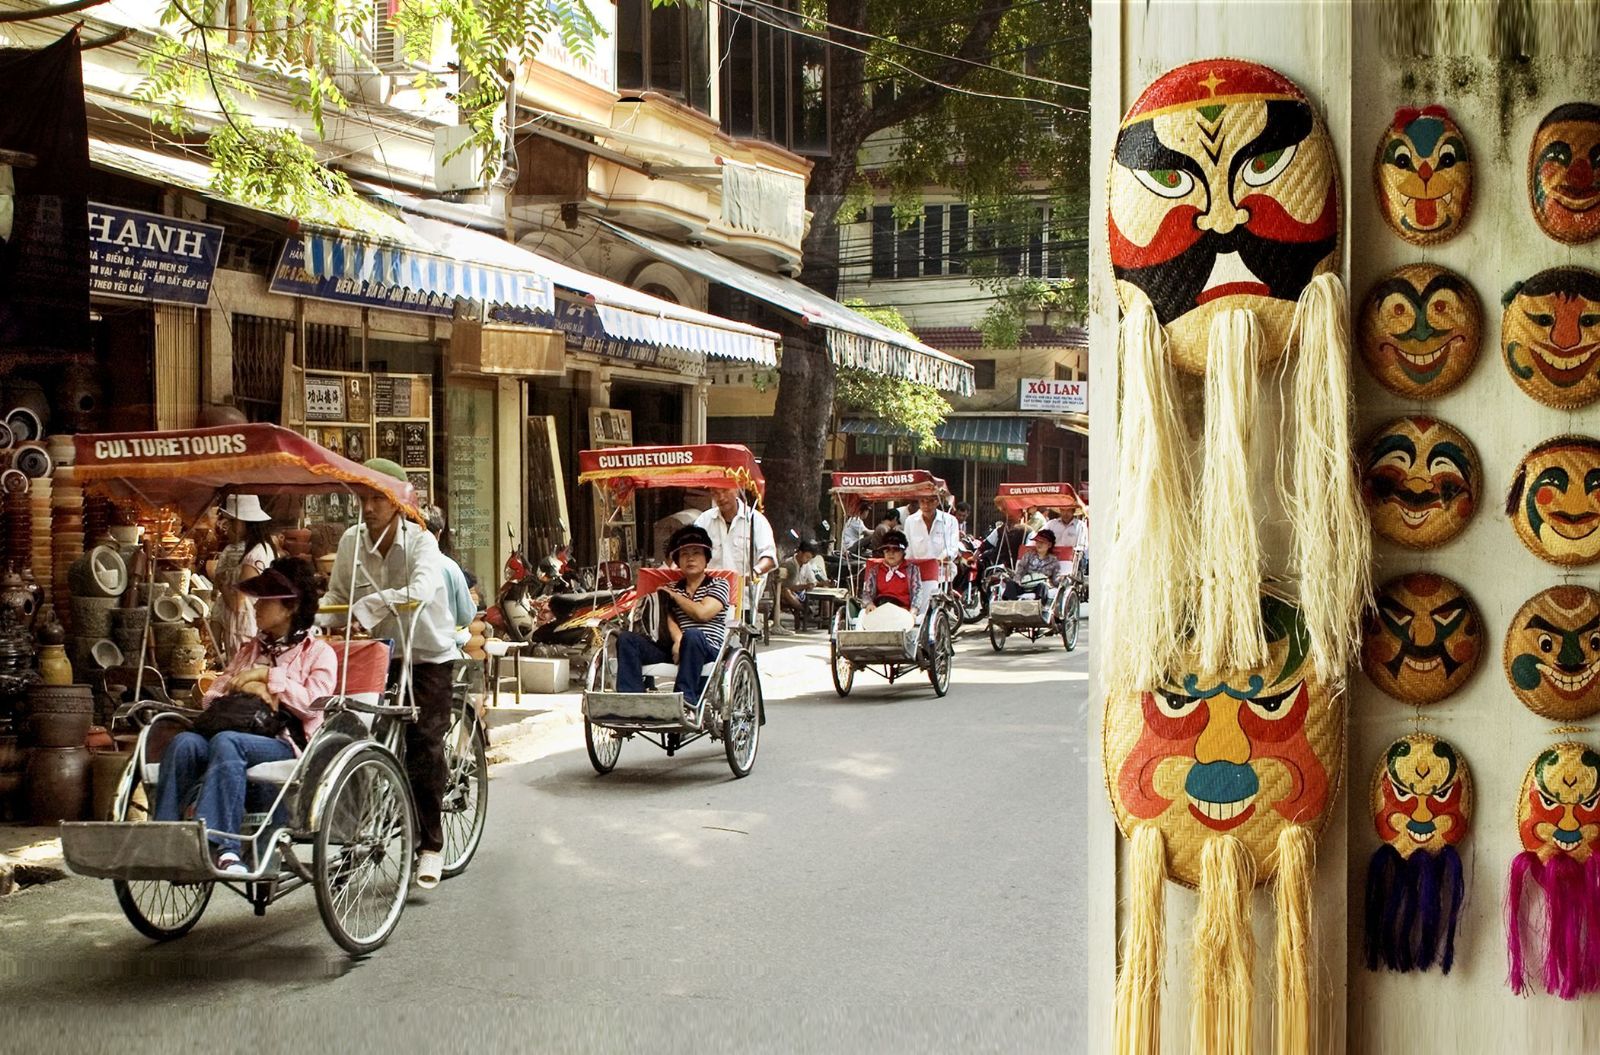 Hanoi Travel Guide: Top 5 Popular Travel Destinations in Hanoi